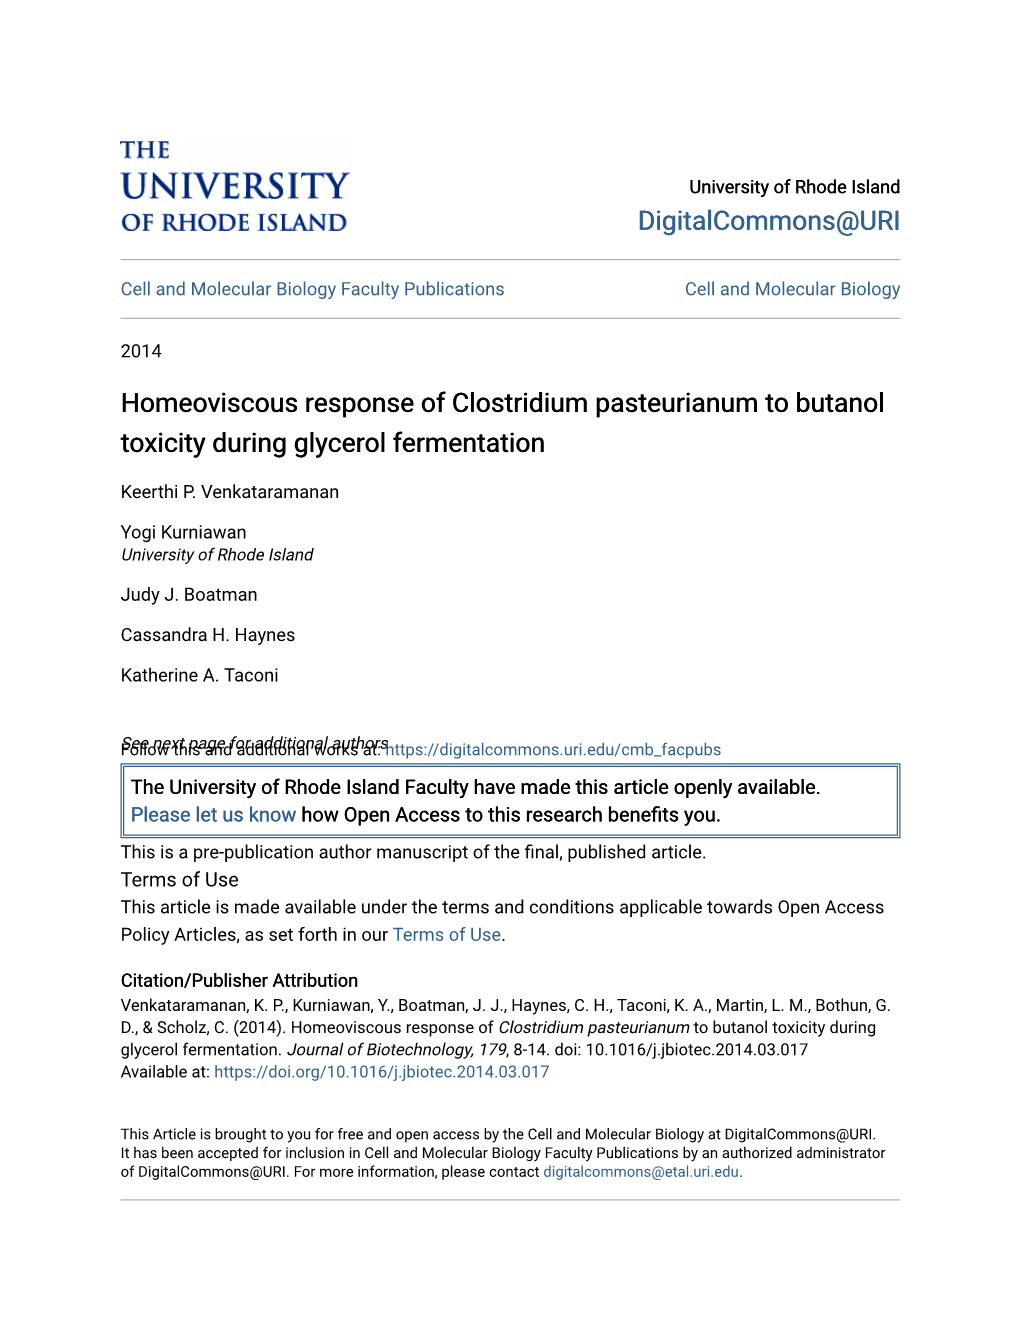 Homeoviscous Response of Clostridium Pasteurianum to Butanol Toxicity During Glycerol Fermentation